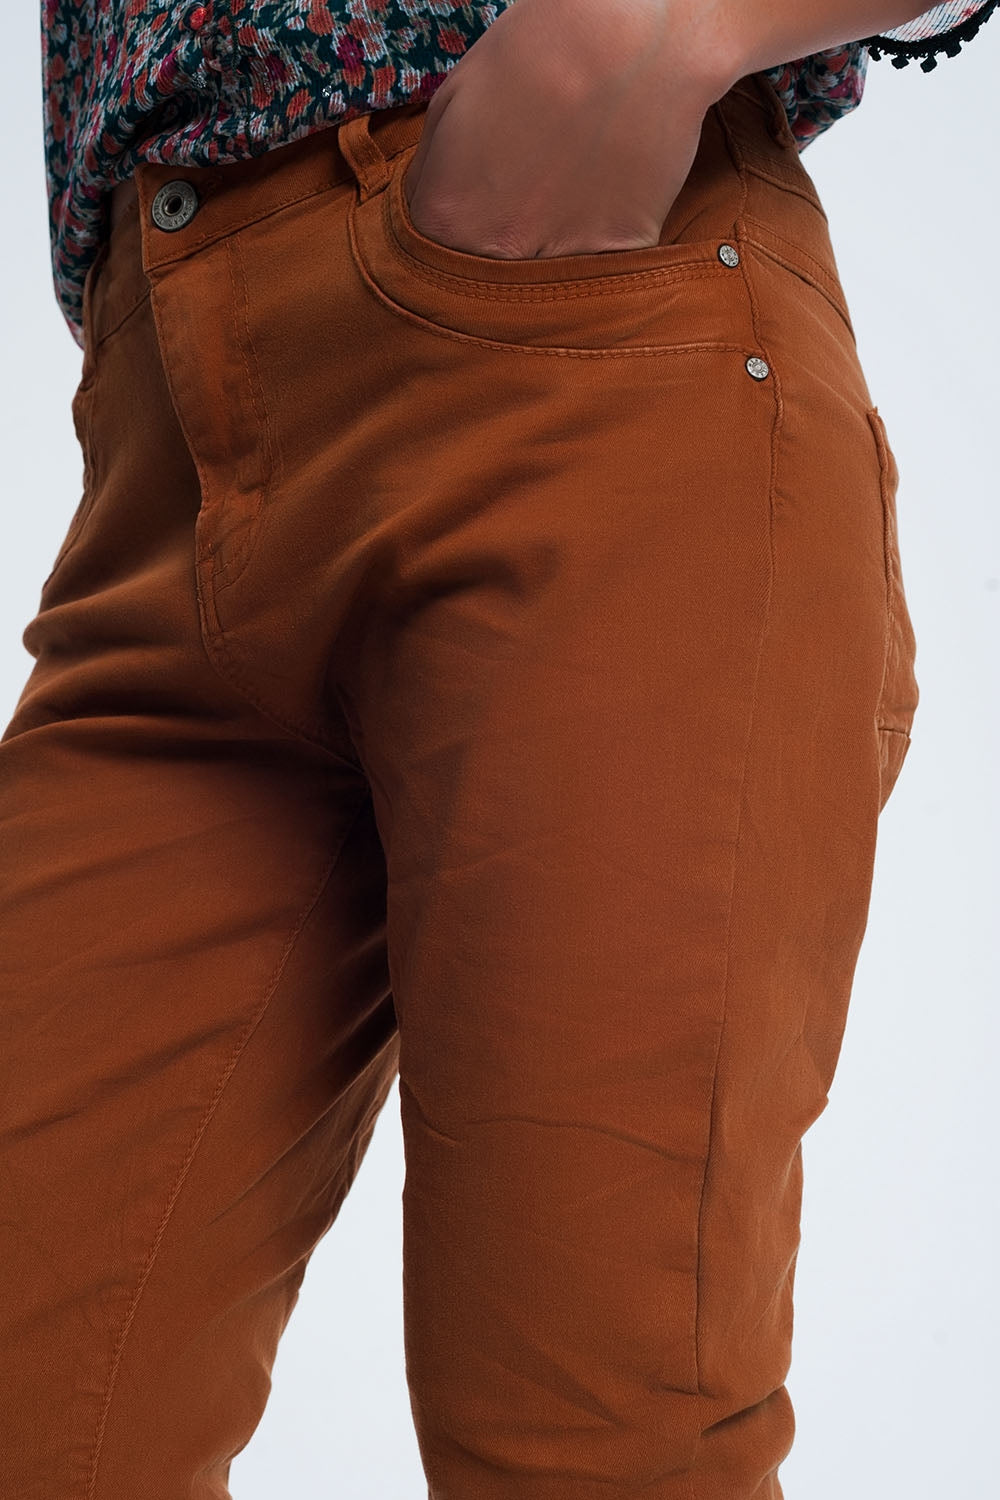 Drop crotch skinny jean in Orange Szua Store